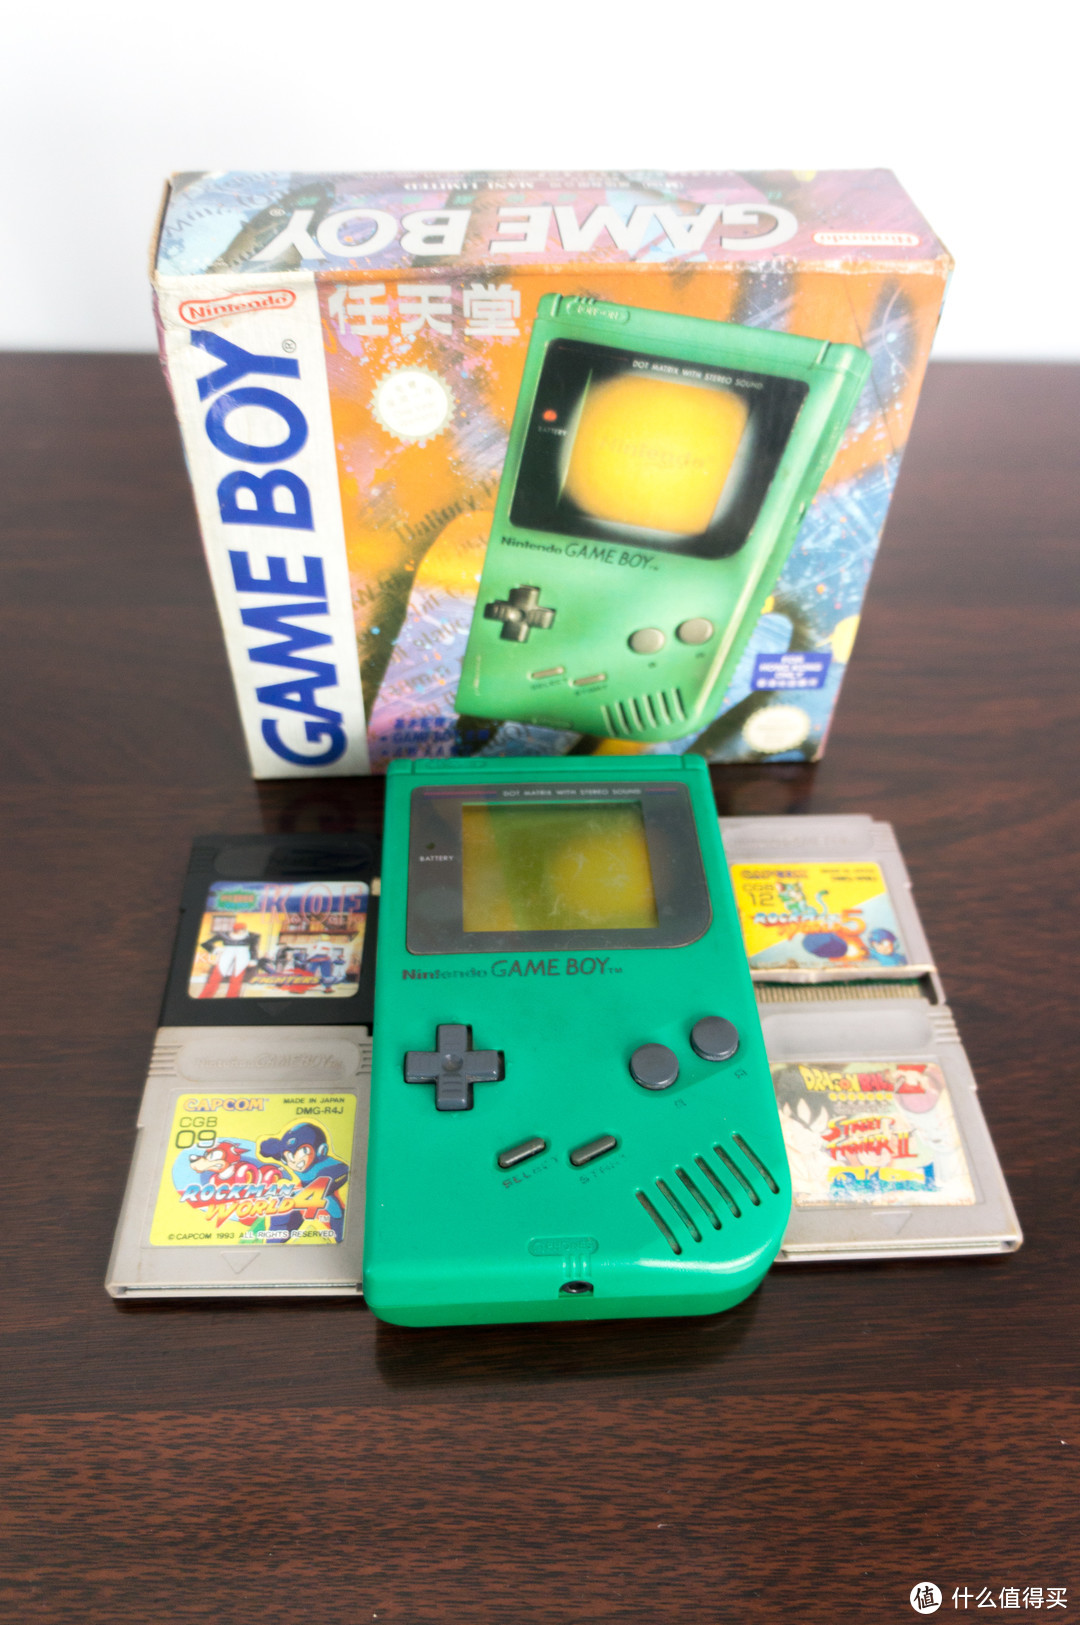 Game Boy是任天堂公司在1989年发售的第一代便携式游戏机。